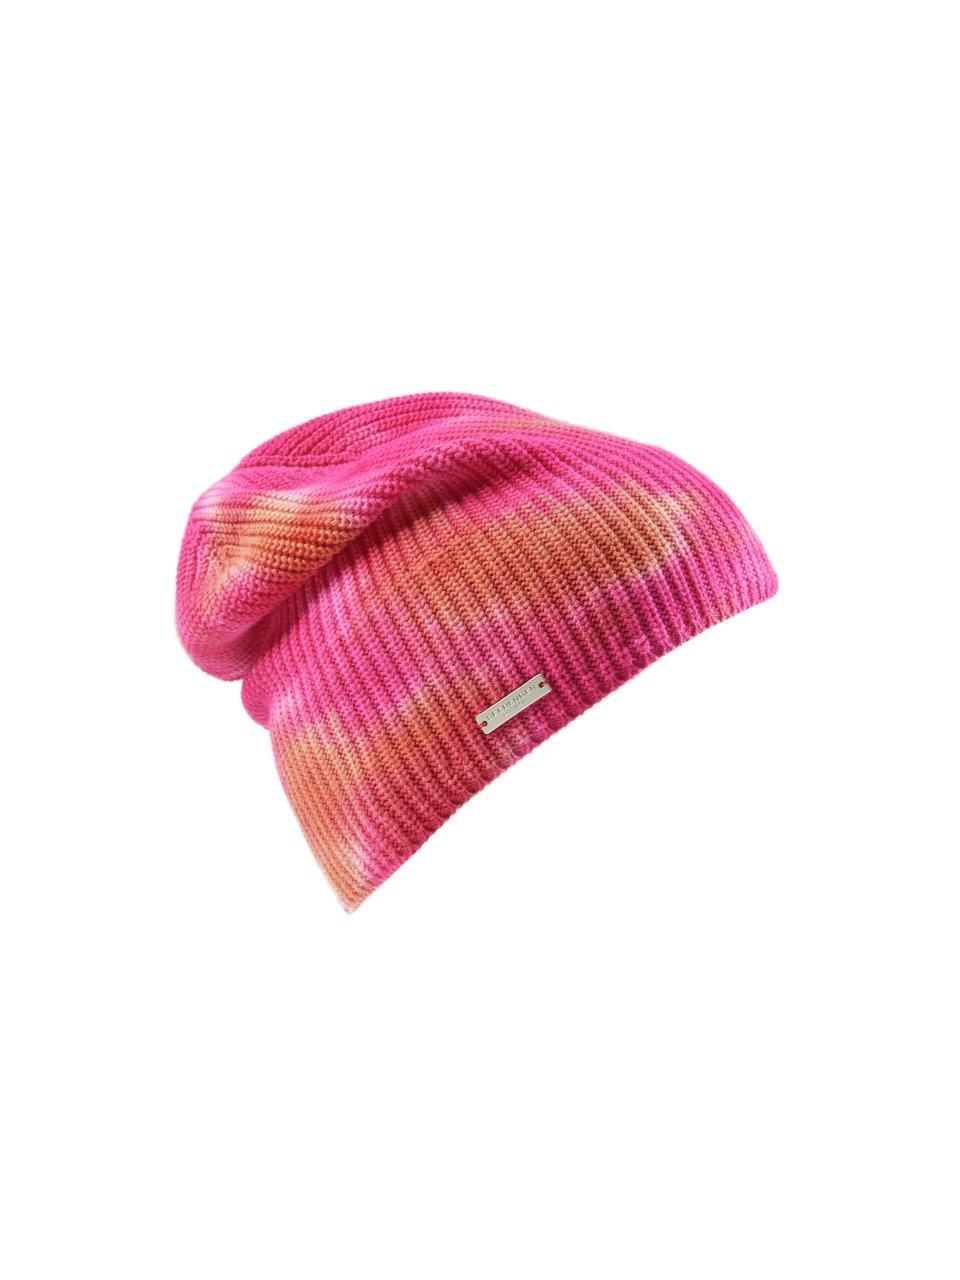 Induceren Snikken vlinder Seeberger - Gebreide muts in batik-look - pink/multicolour